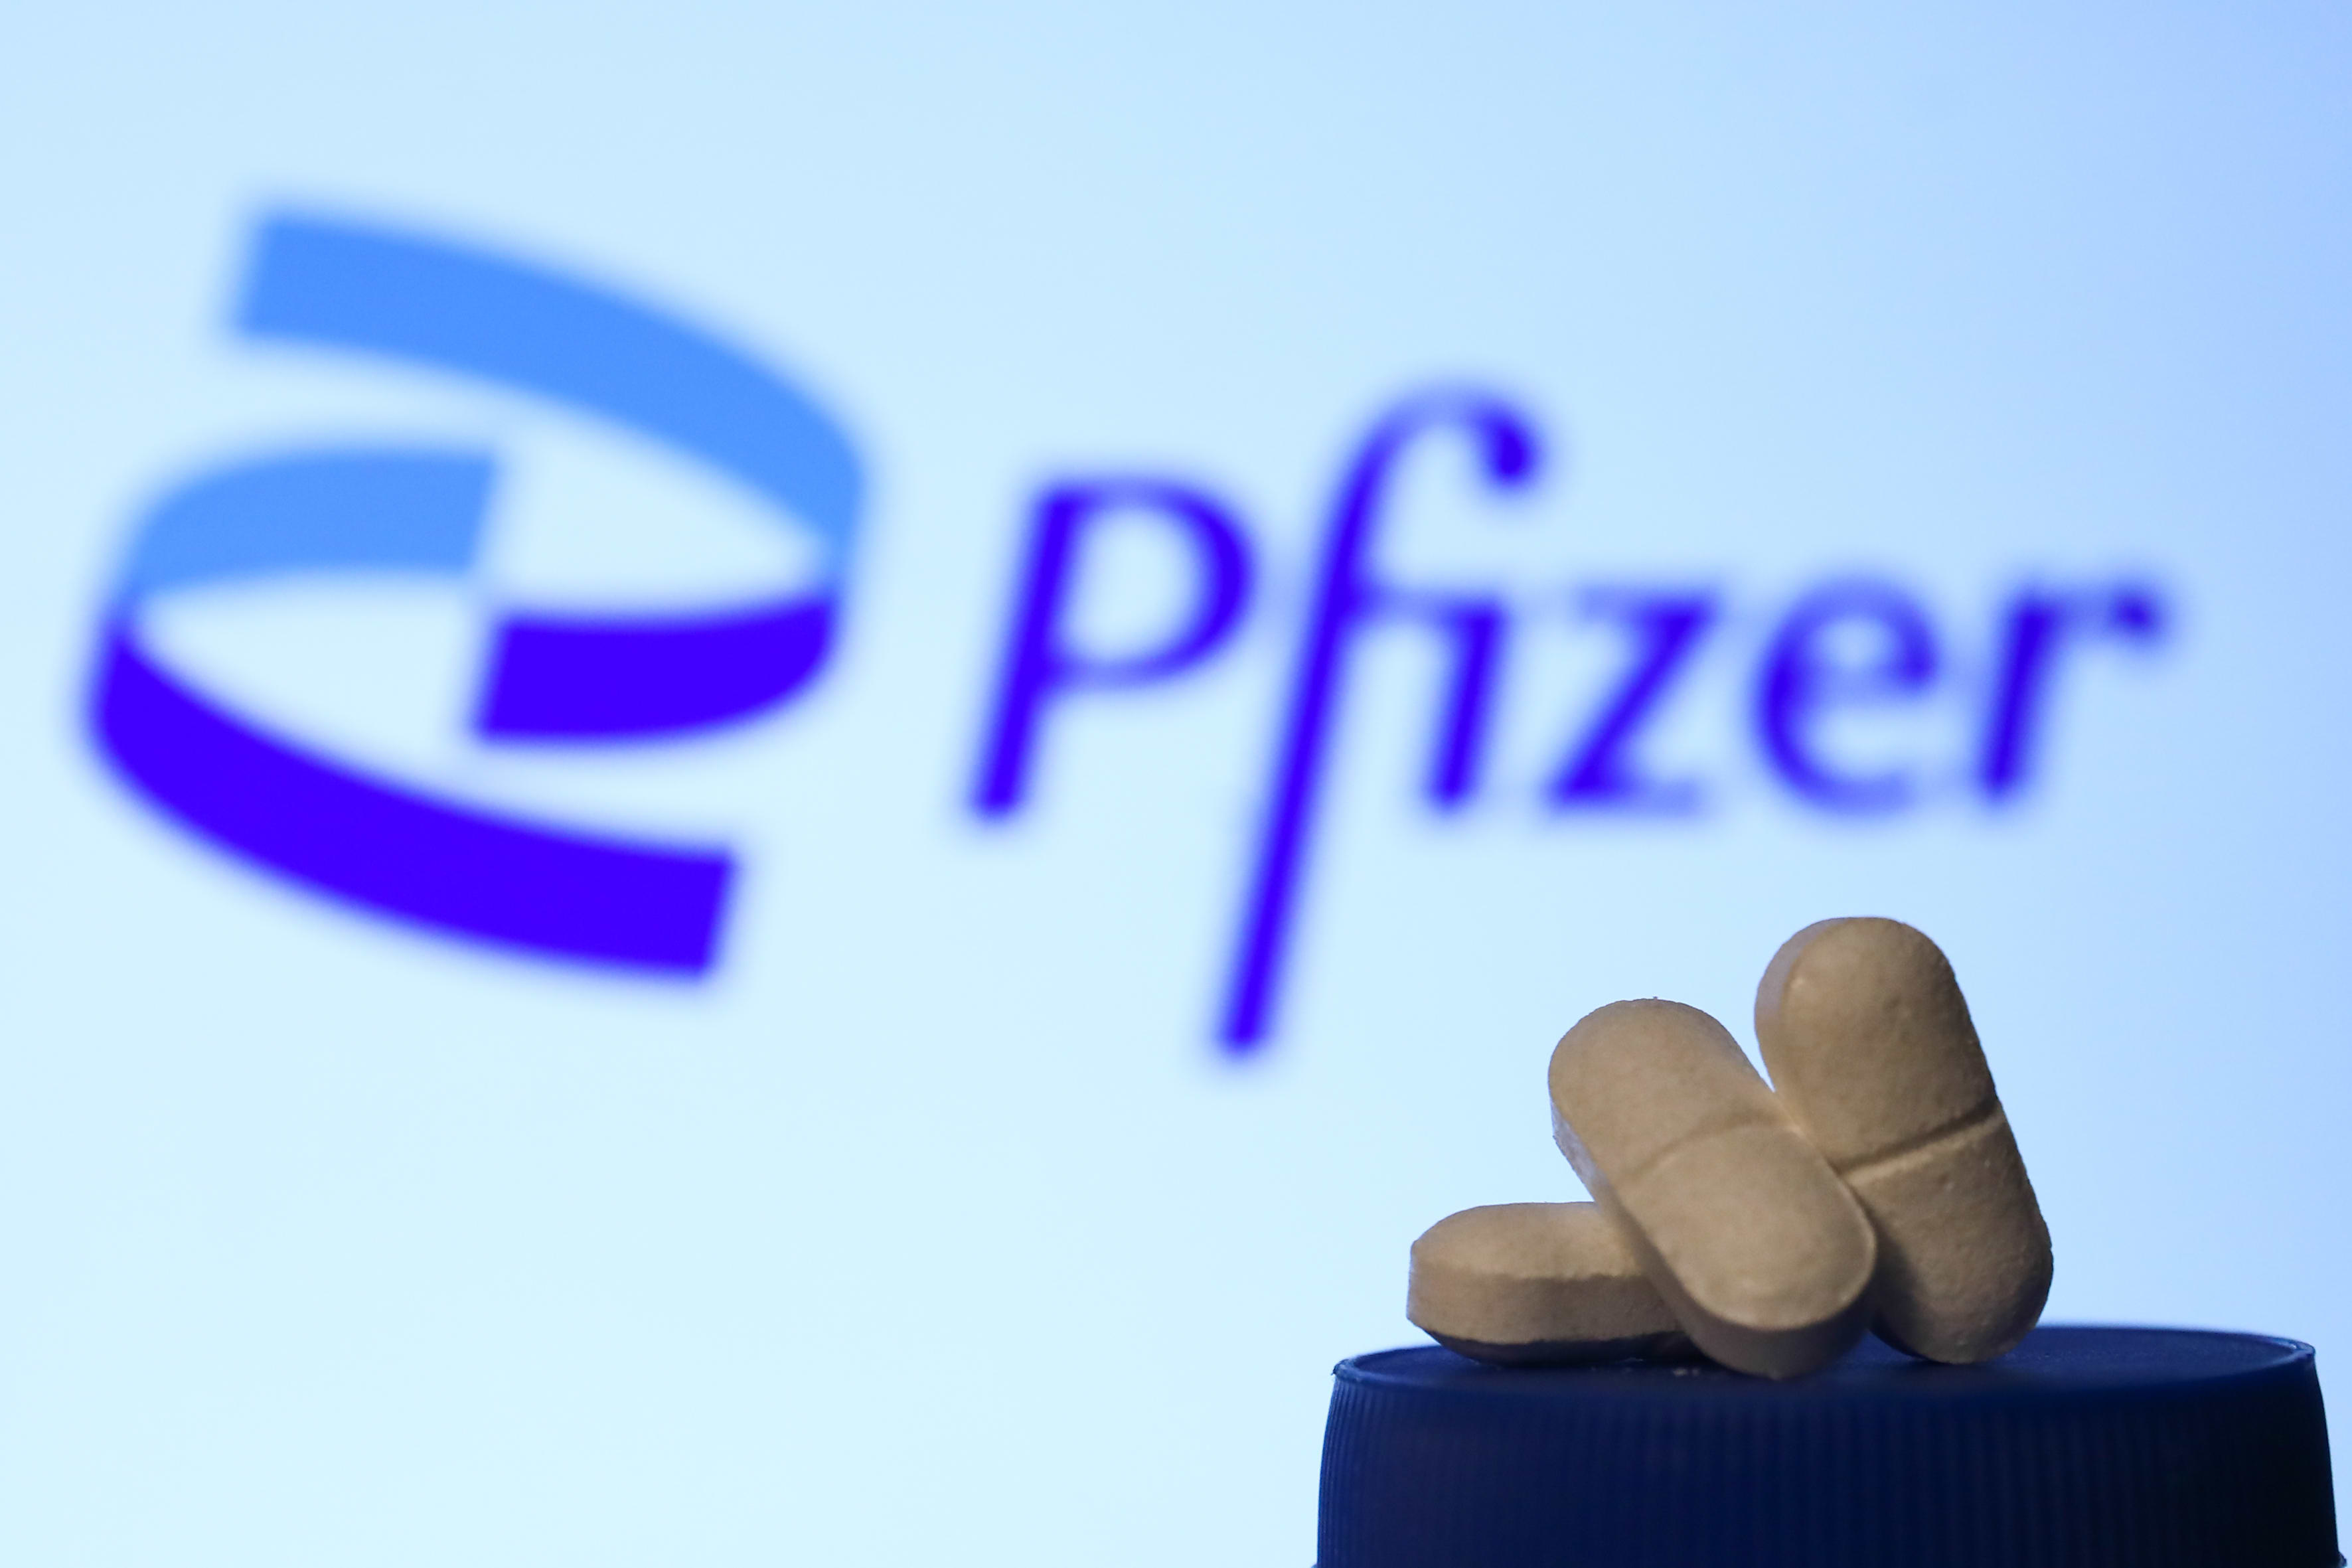 pfizer share price